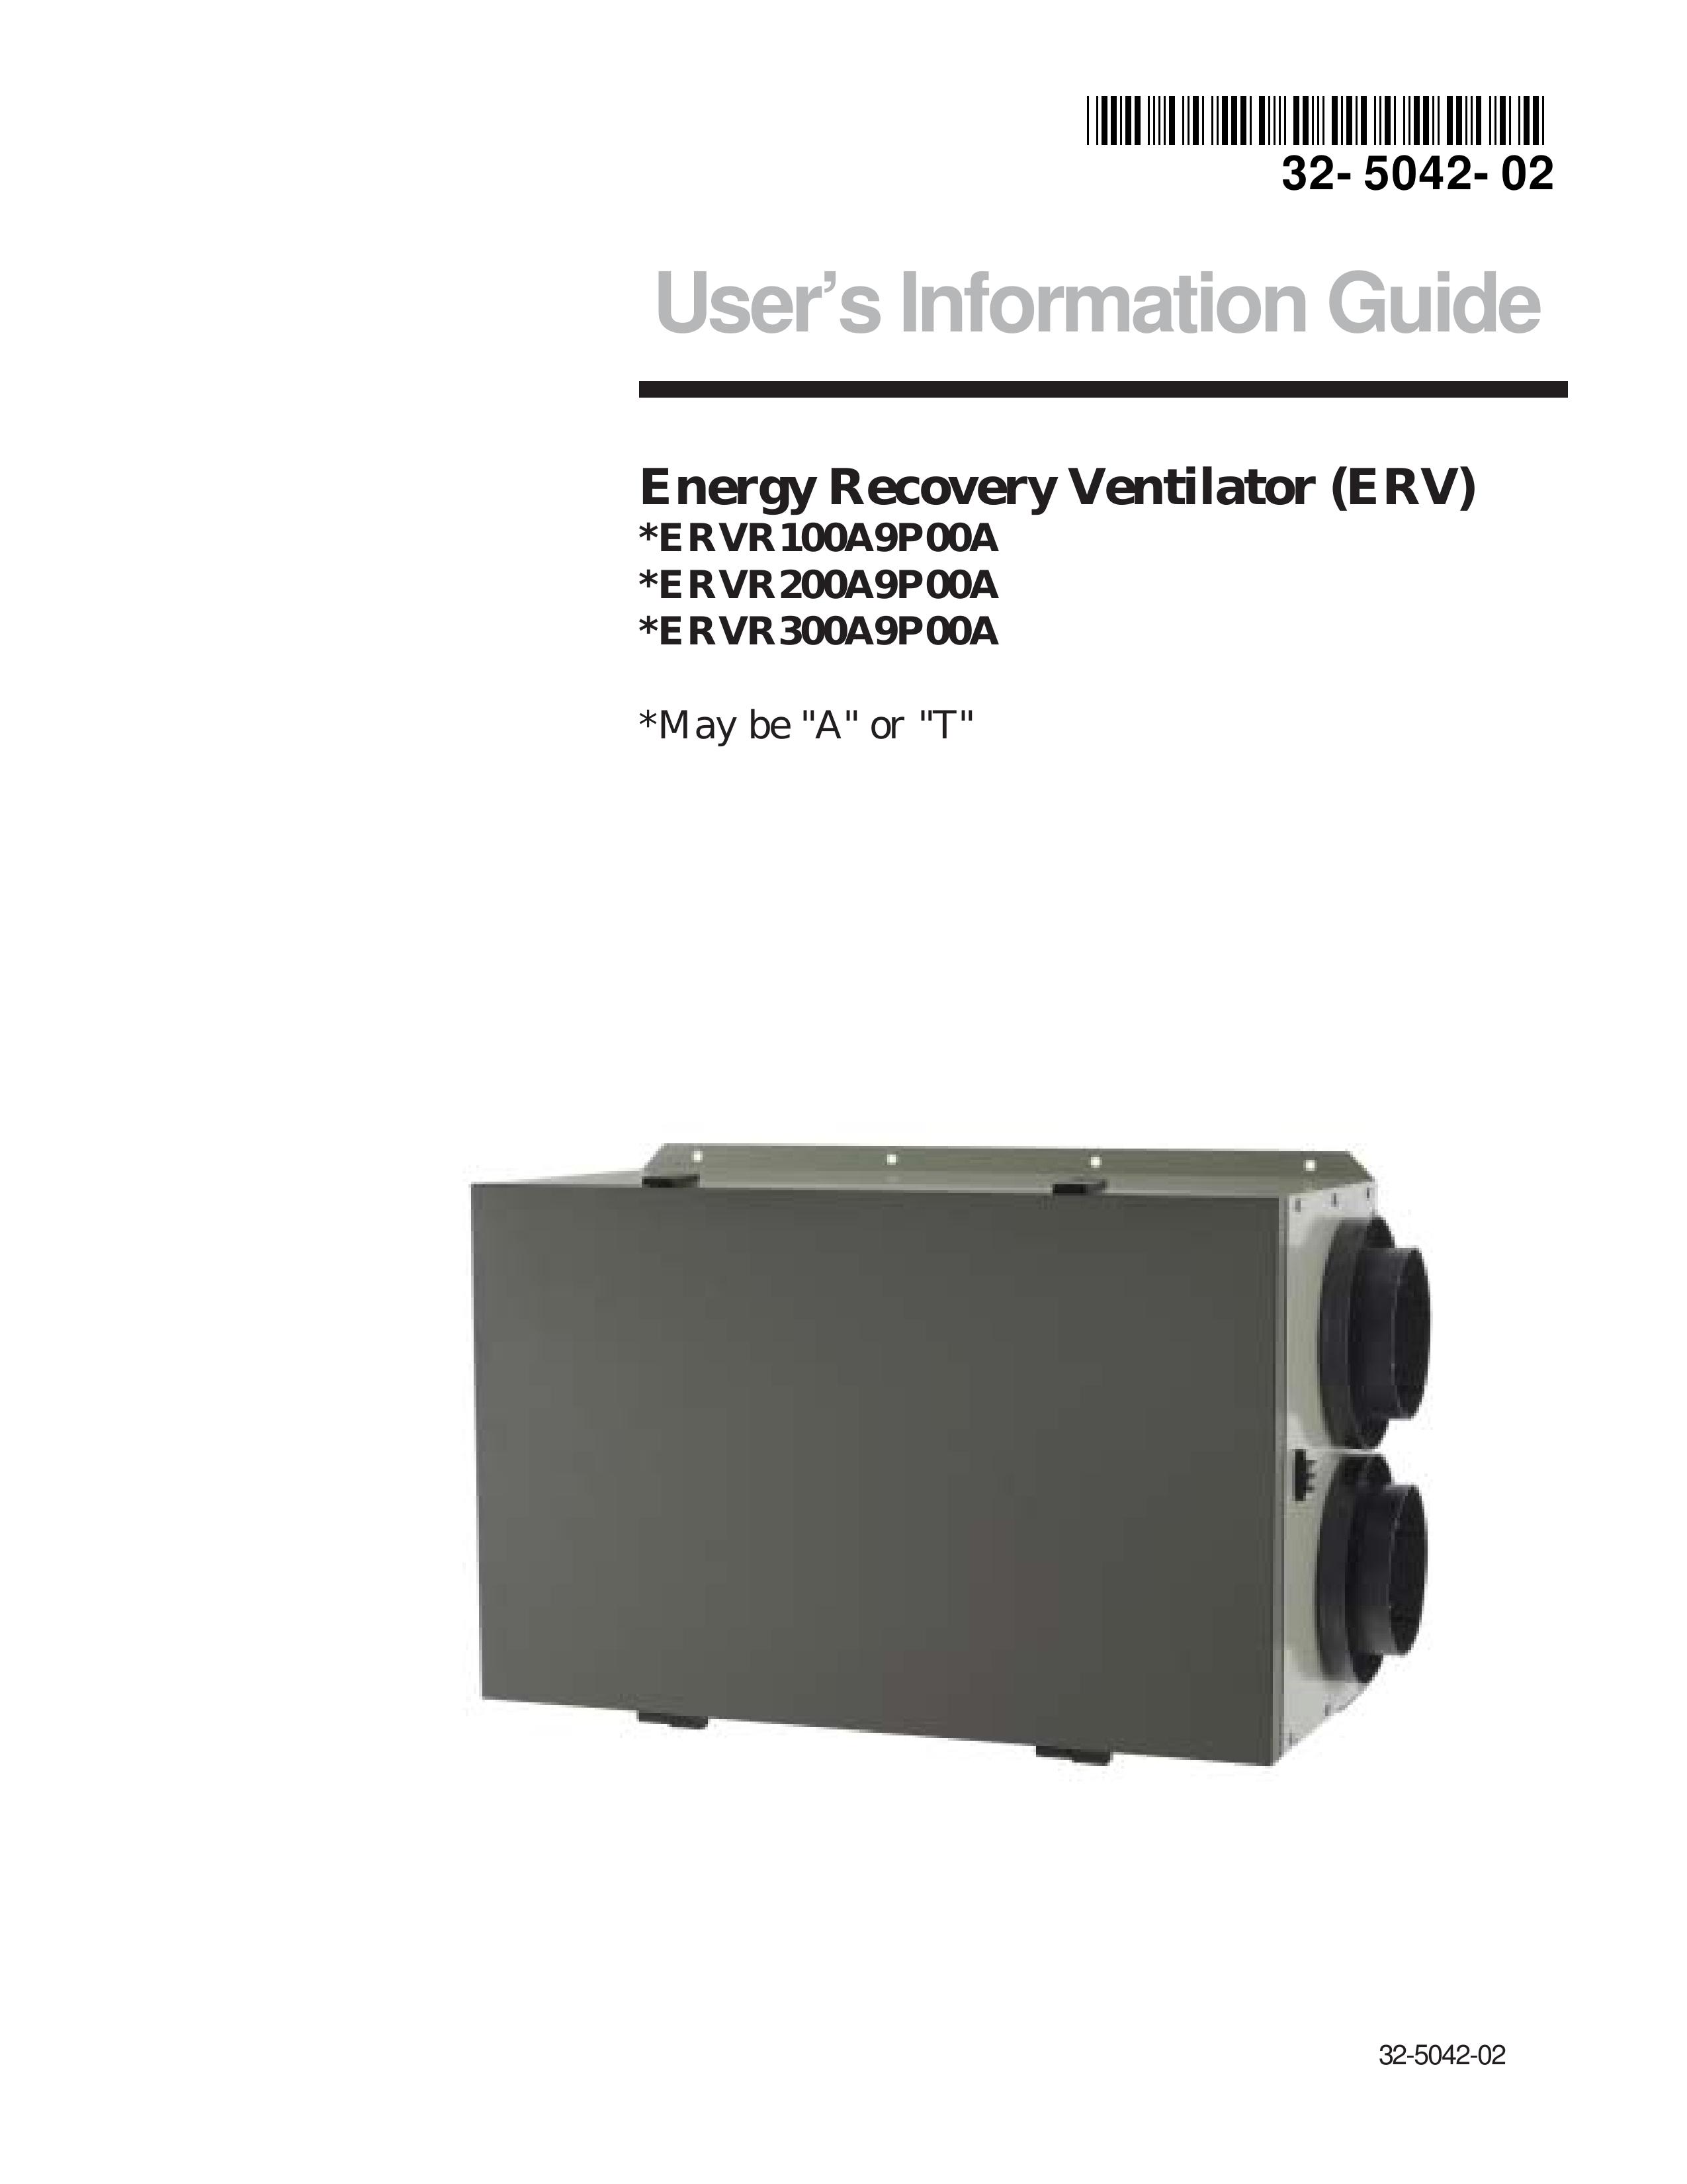 American Standard ERVR200A9P00A Ventilation Hood User Manual